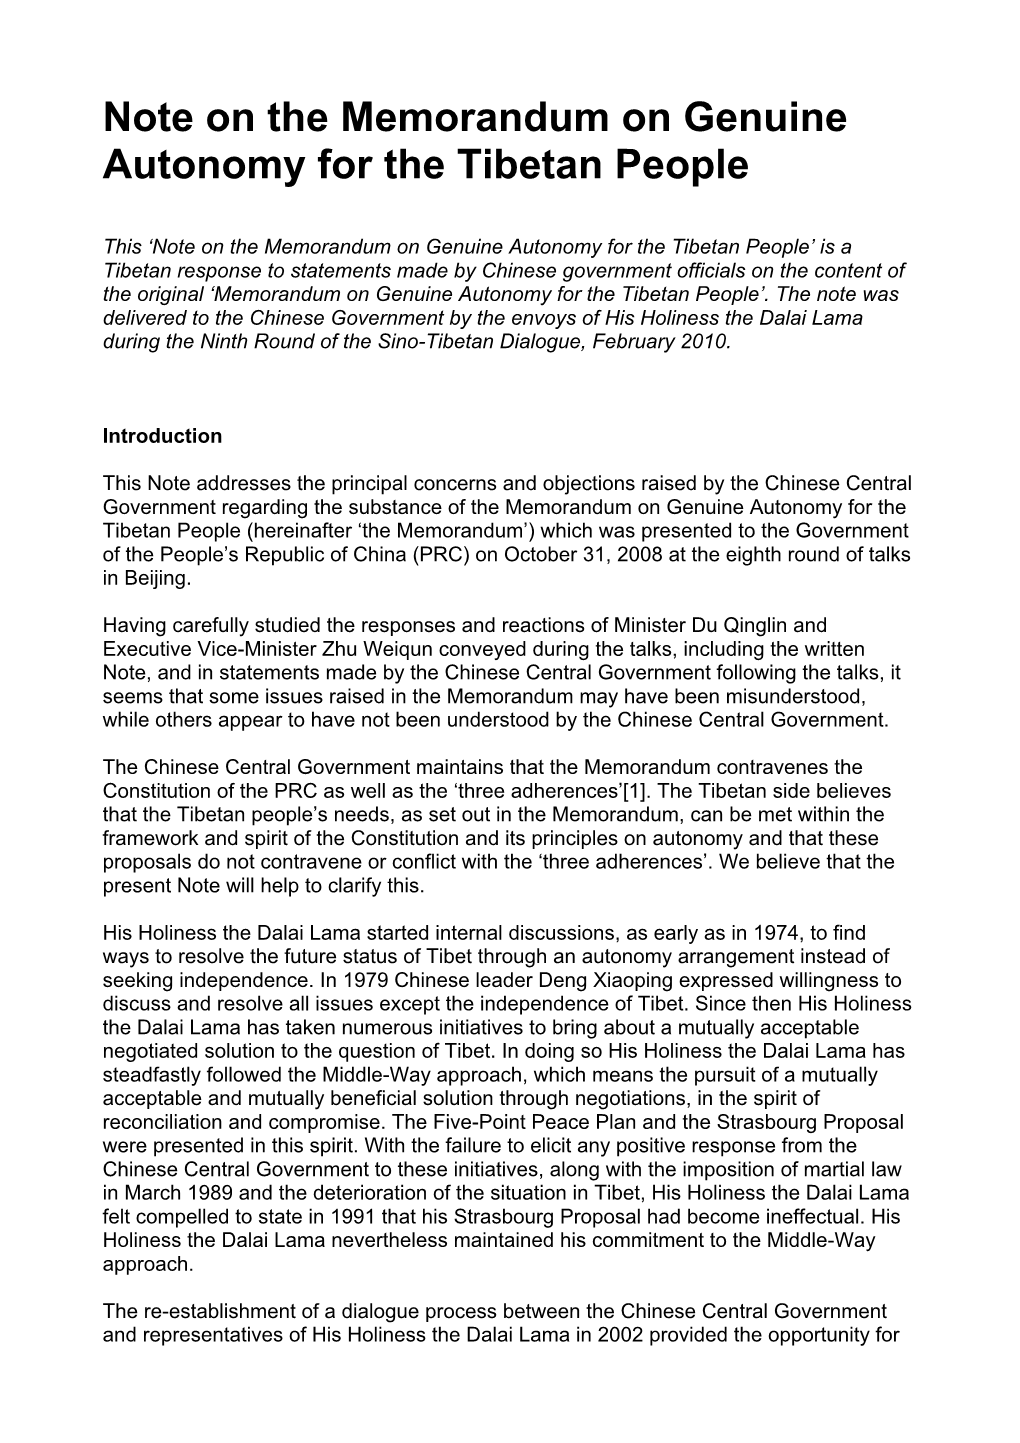 Note on the Memorandum on Genuine Autonomy for the Tibetan People